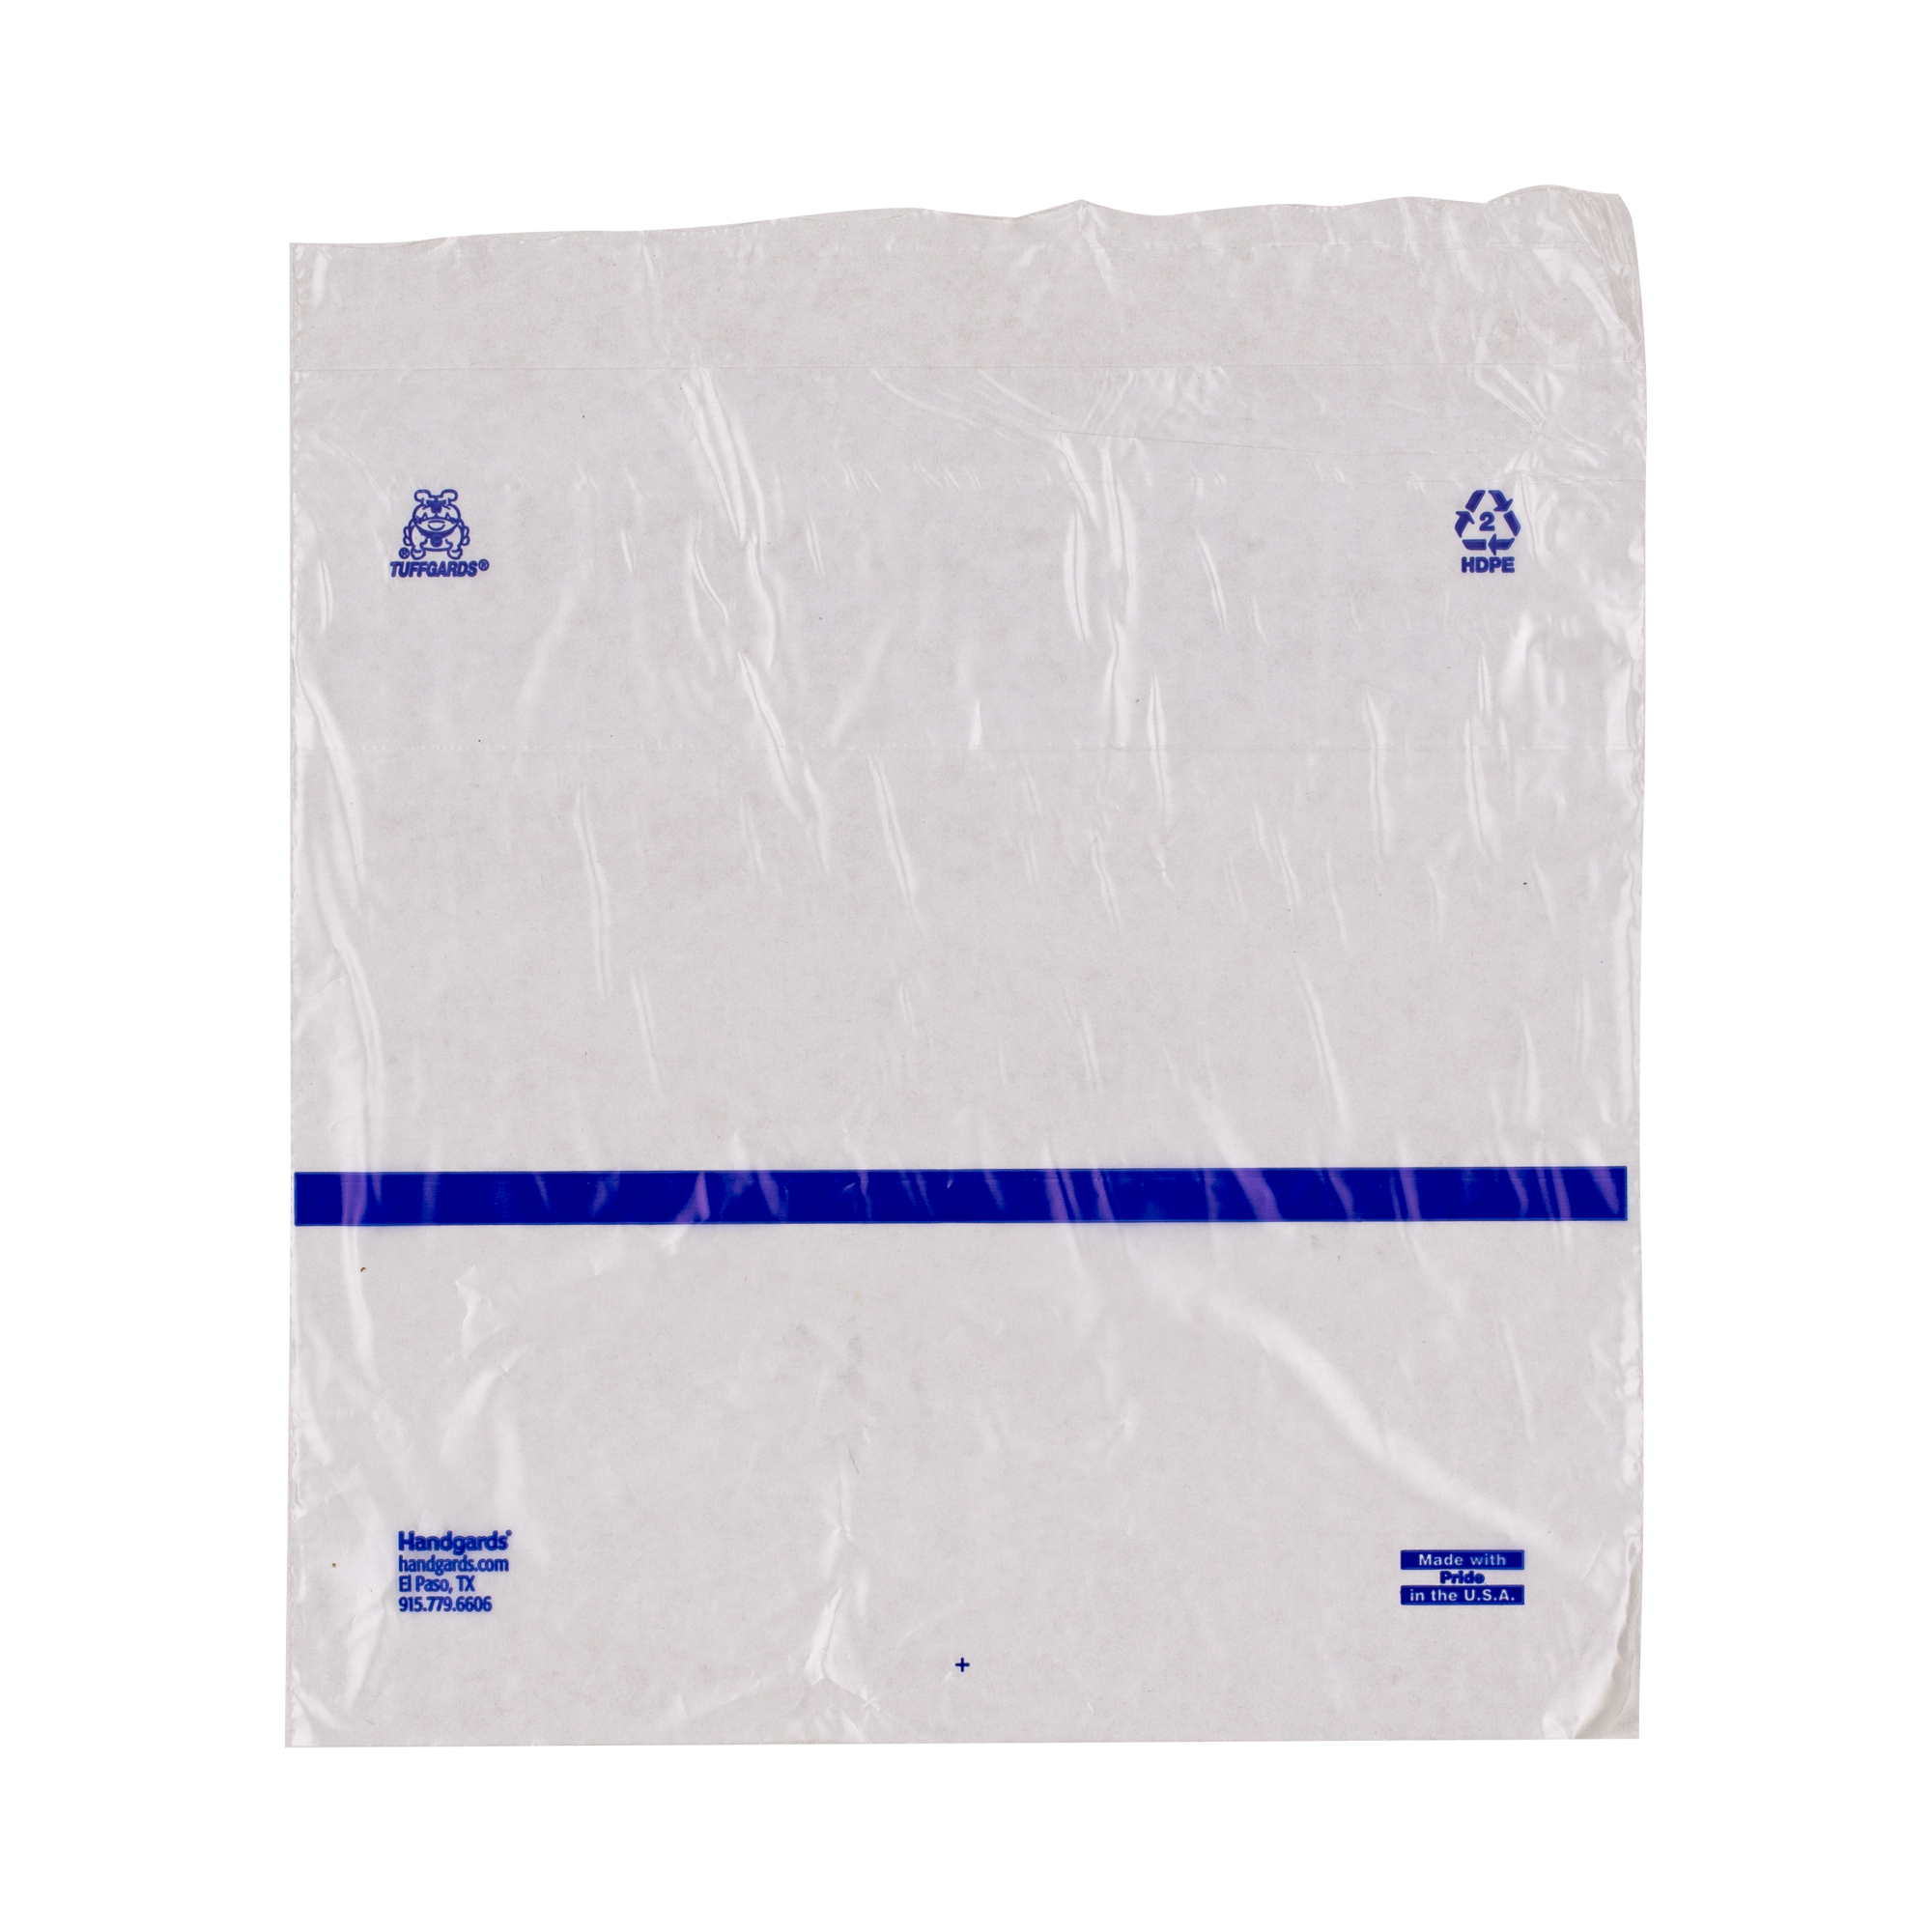 Tuffgards® High Density Disposable Freezer Storage Bags – FB14